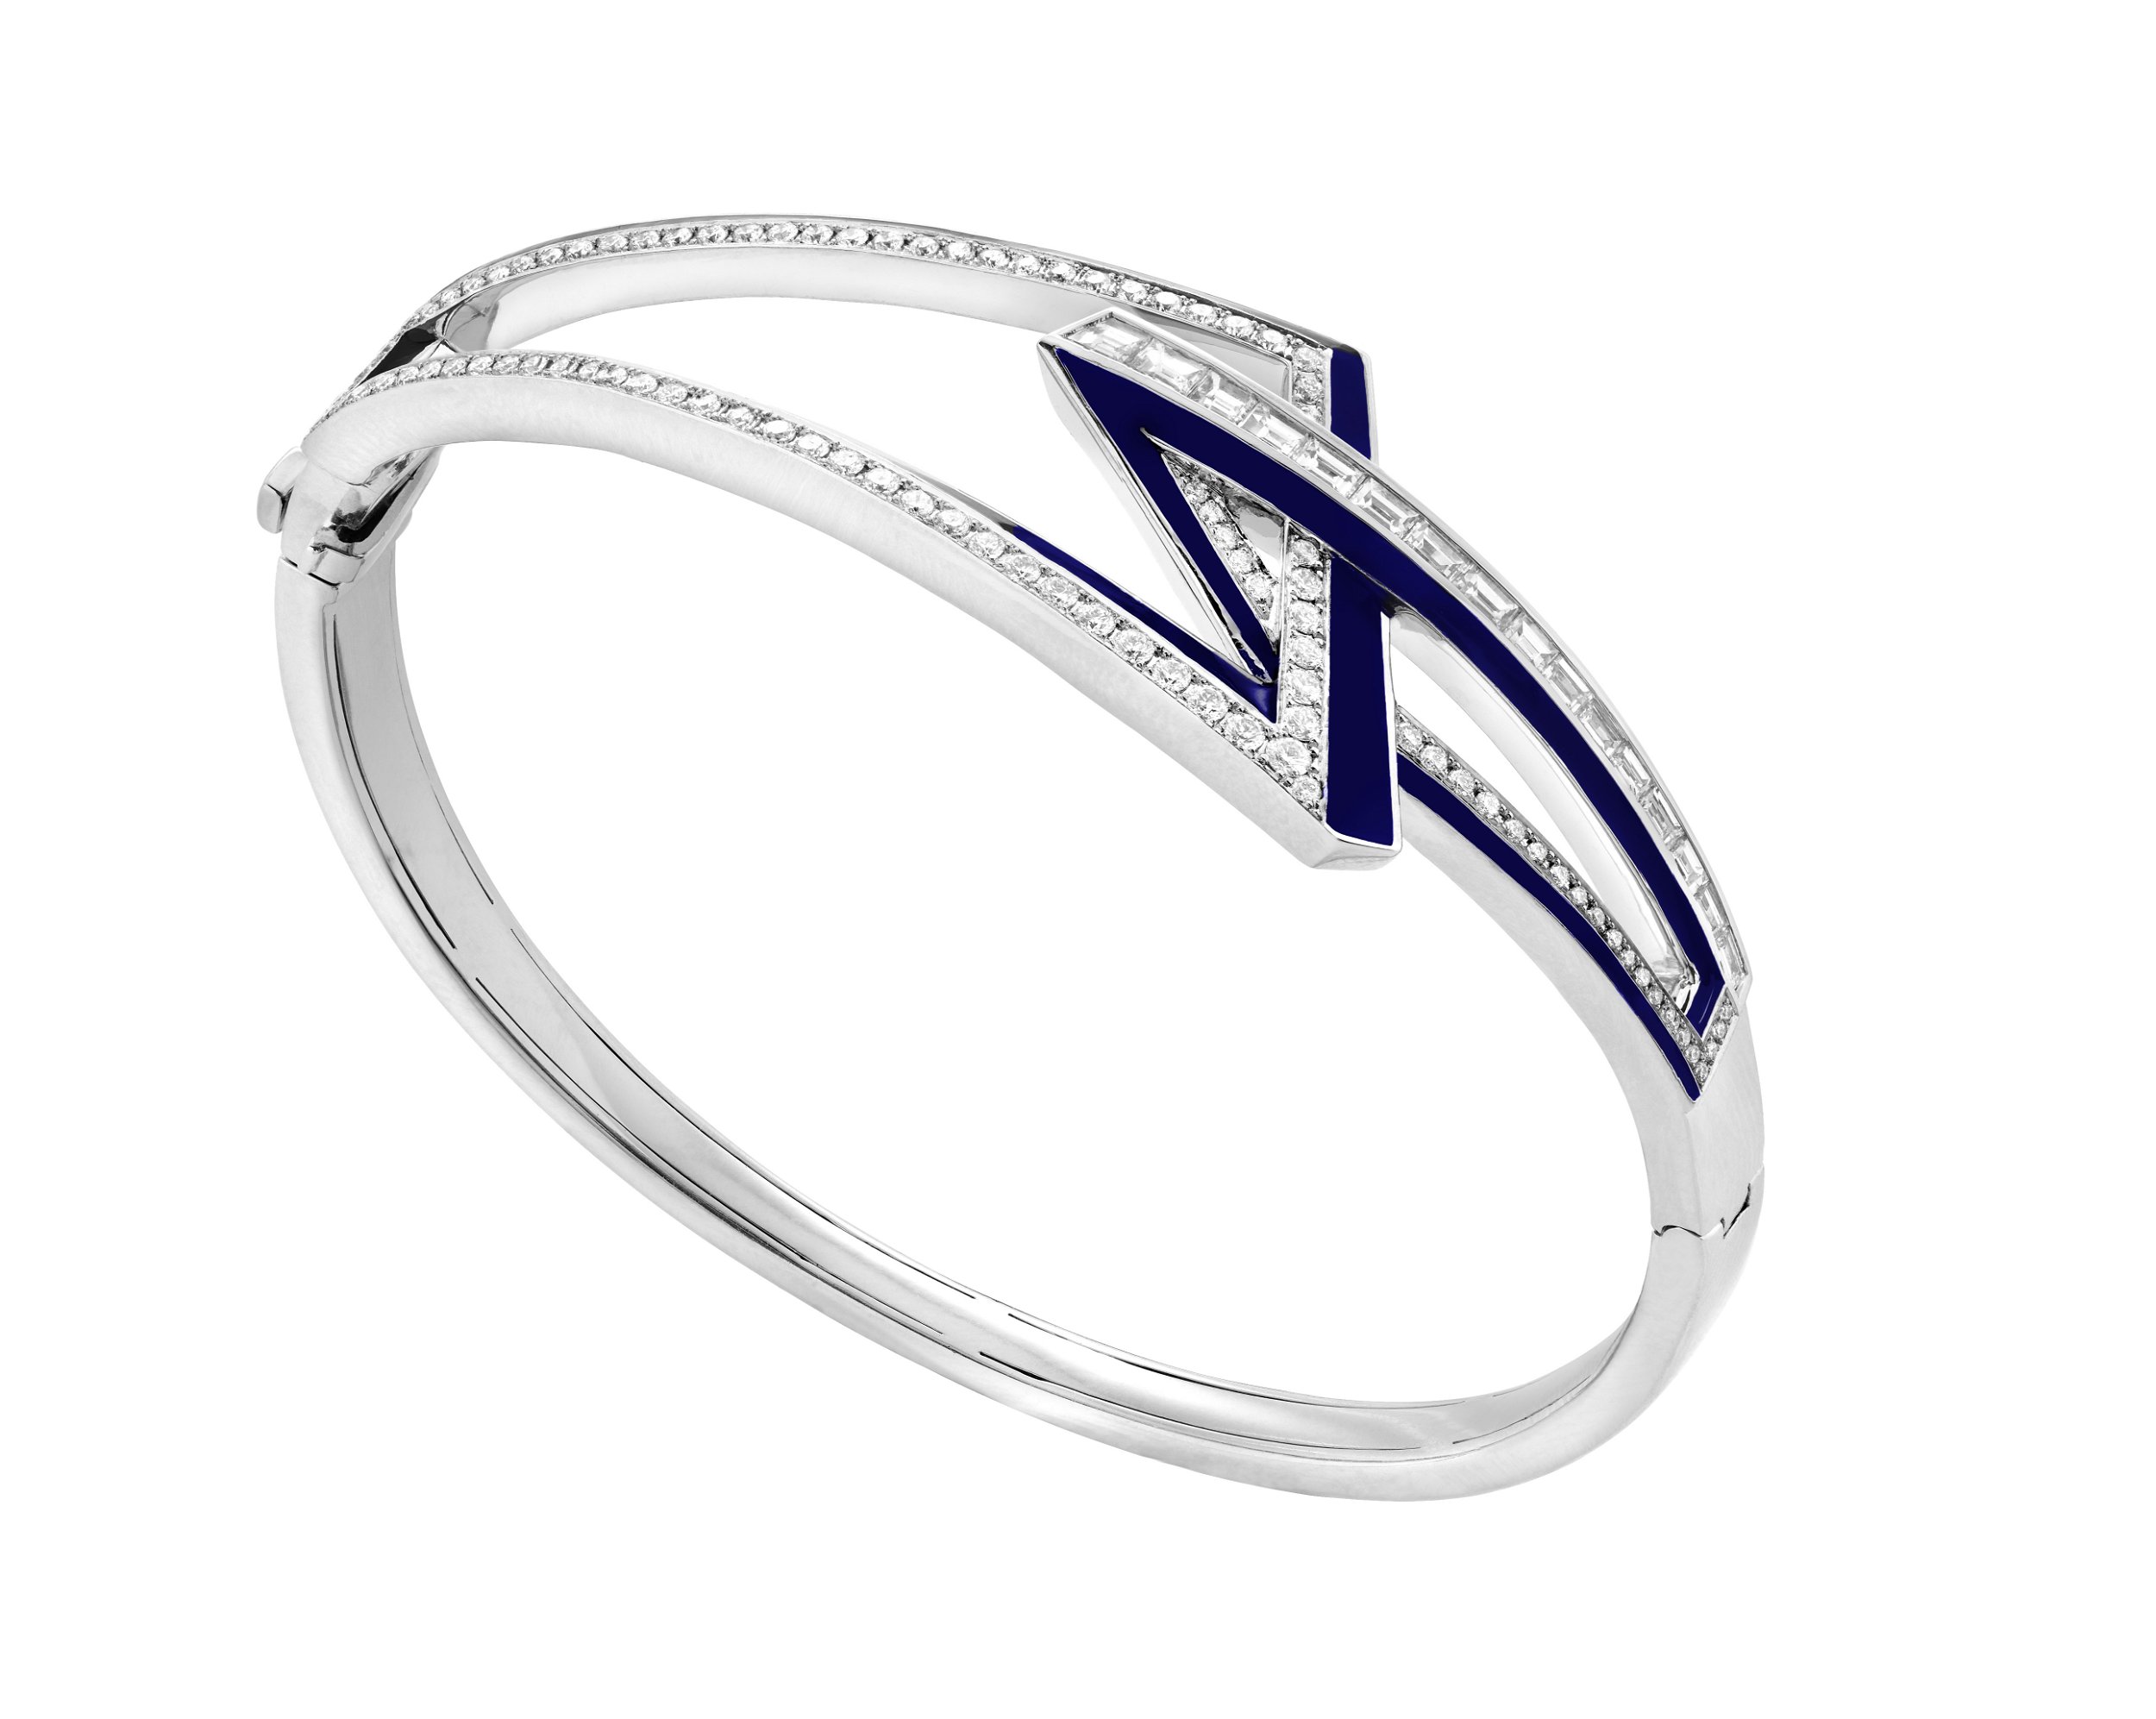 Vertigo Obtuse Bracelet with White Diamonds and Dark Blue Enamel in 18kt White Gold